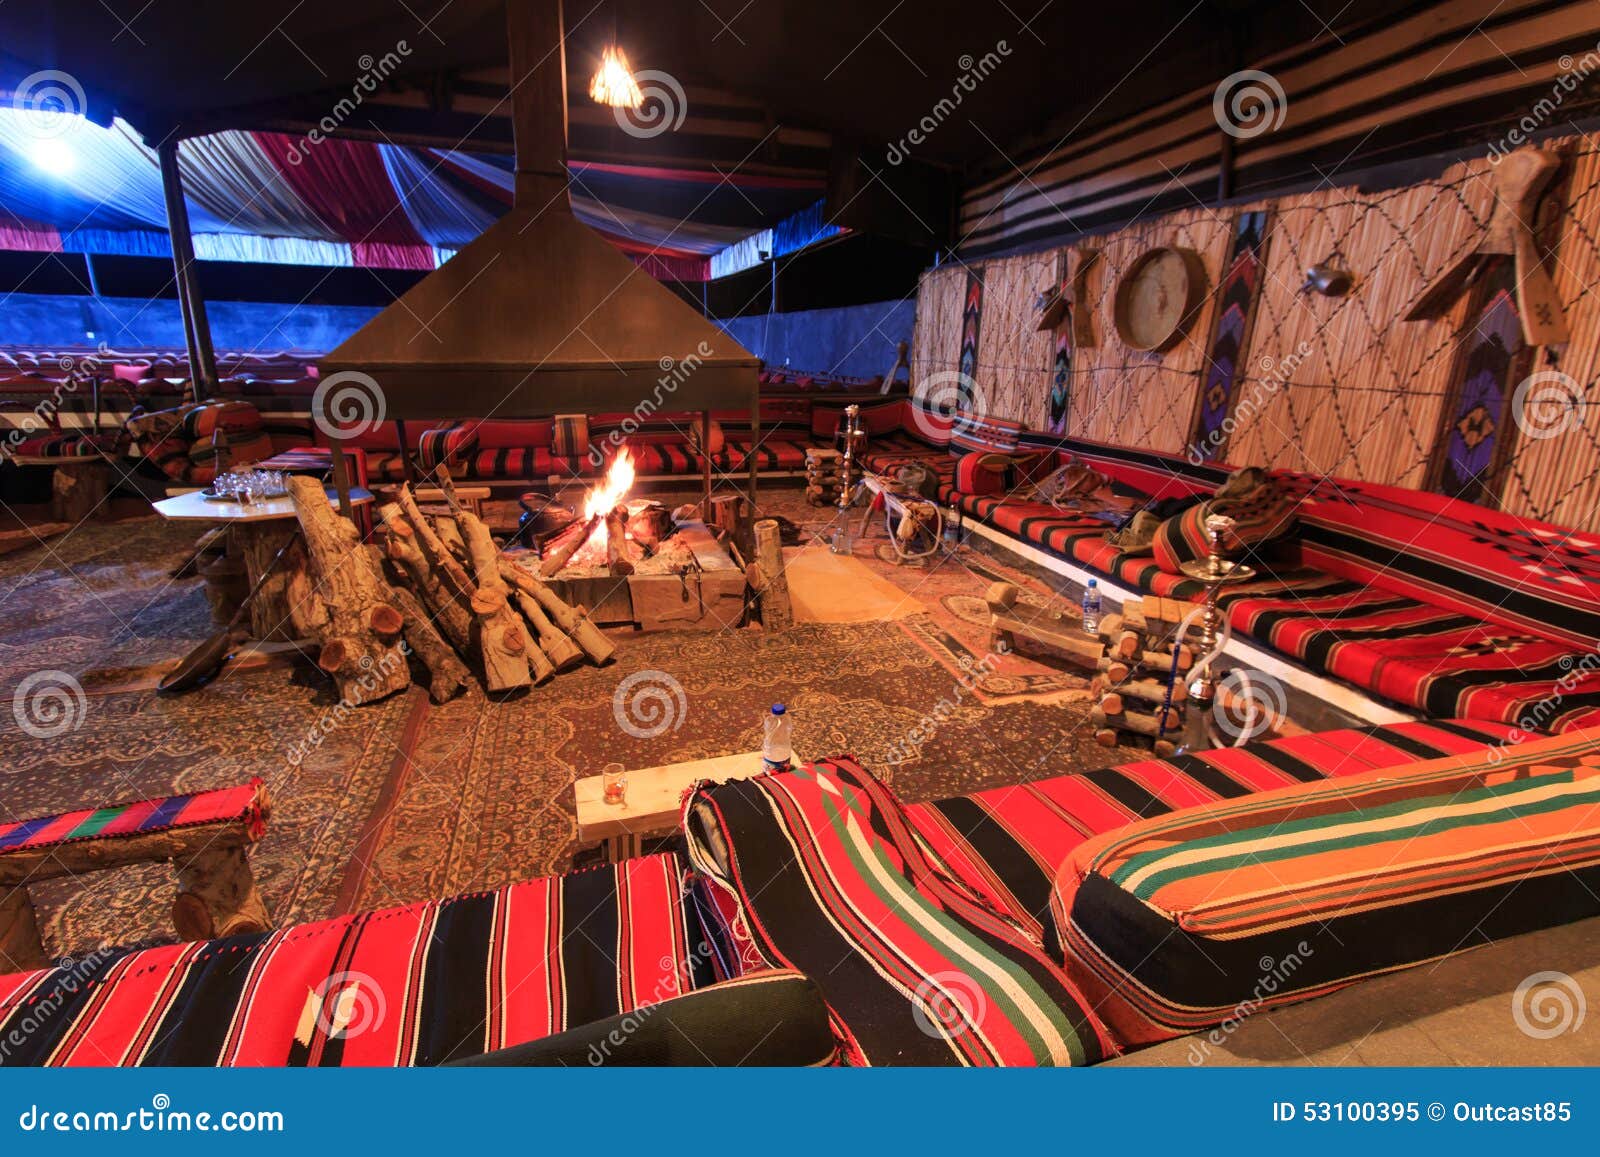 bedouin camp wadi rum desert jordan night 53100395